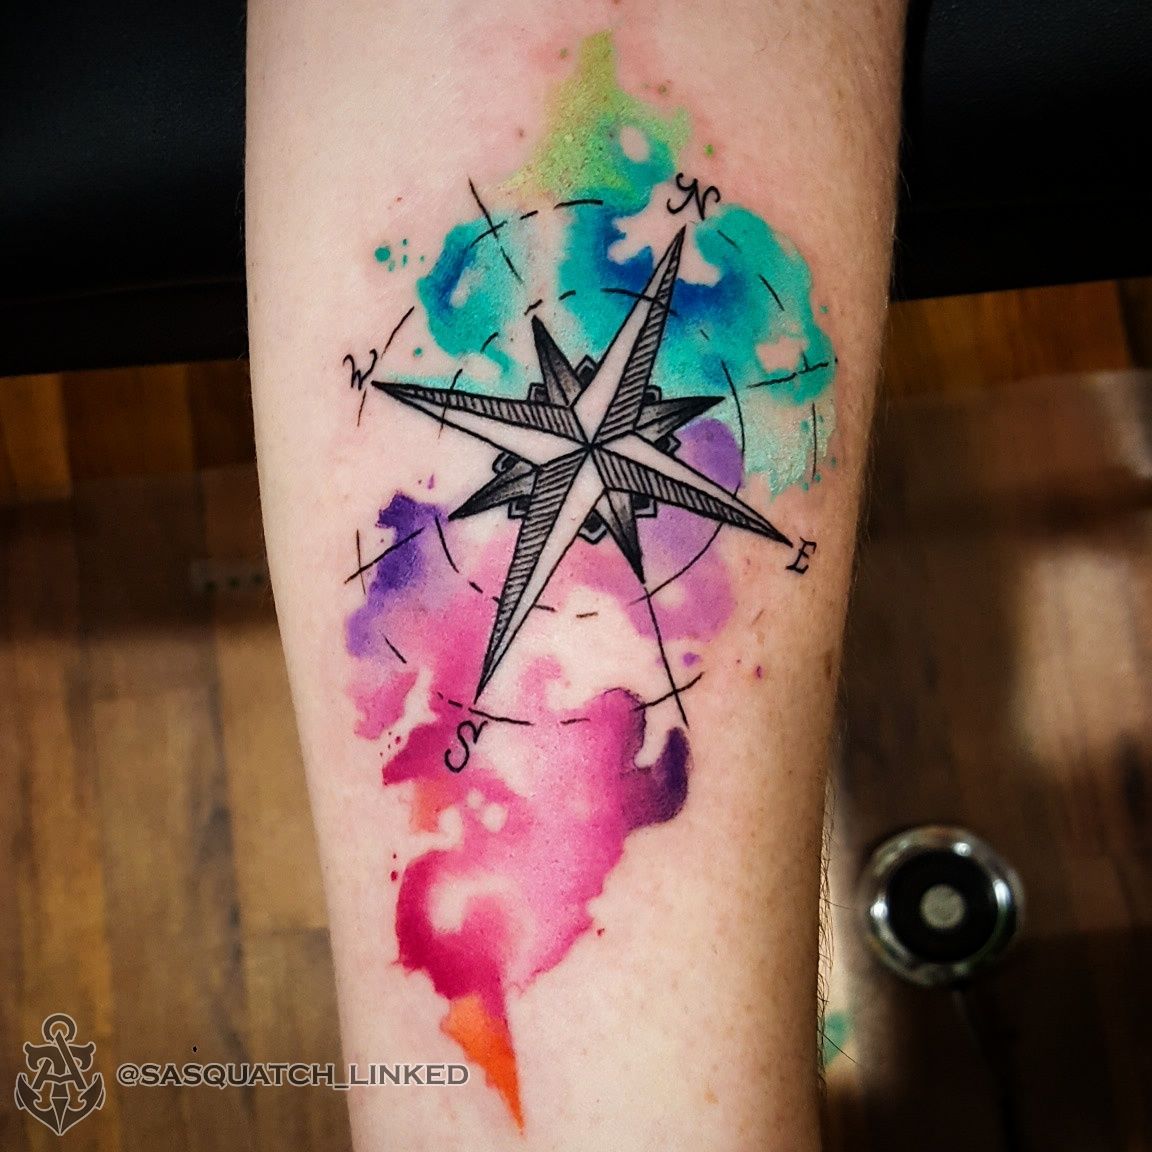 ZEN tattoo Zagreb on Twitter Watercolour compass tattoo by Blaze  watercolor tattoo compass zentattoo zagreb ink httpstcoUD9u8SDuih  httpstcox6T9mFNKBt  Twitter